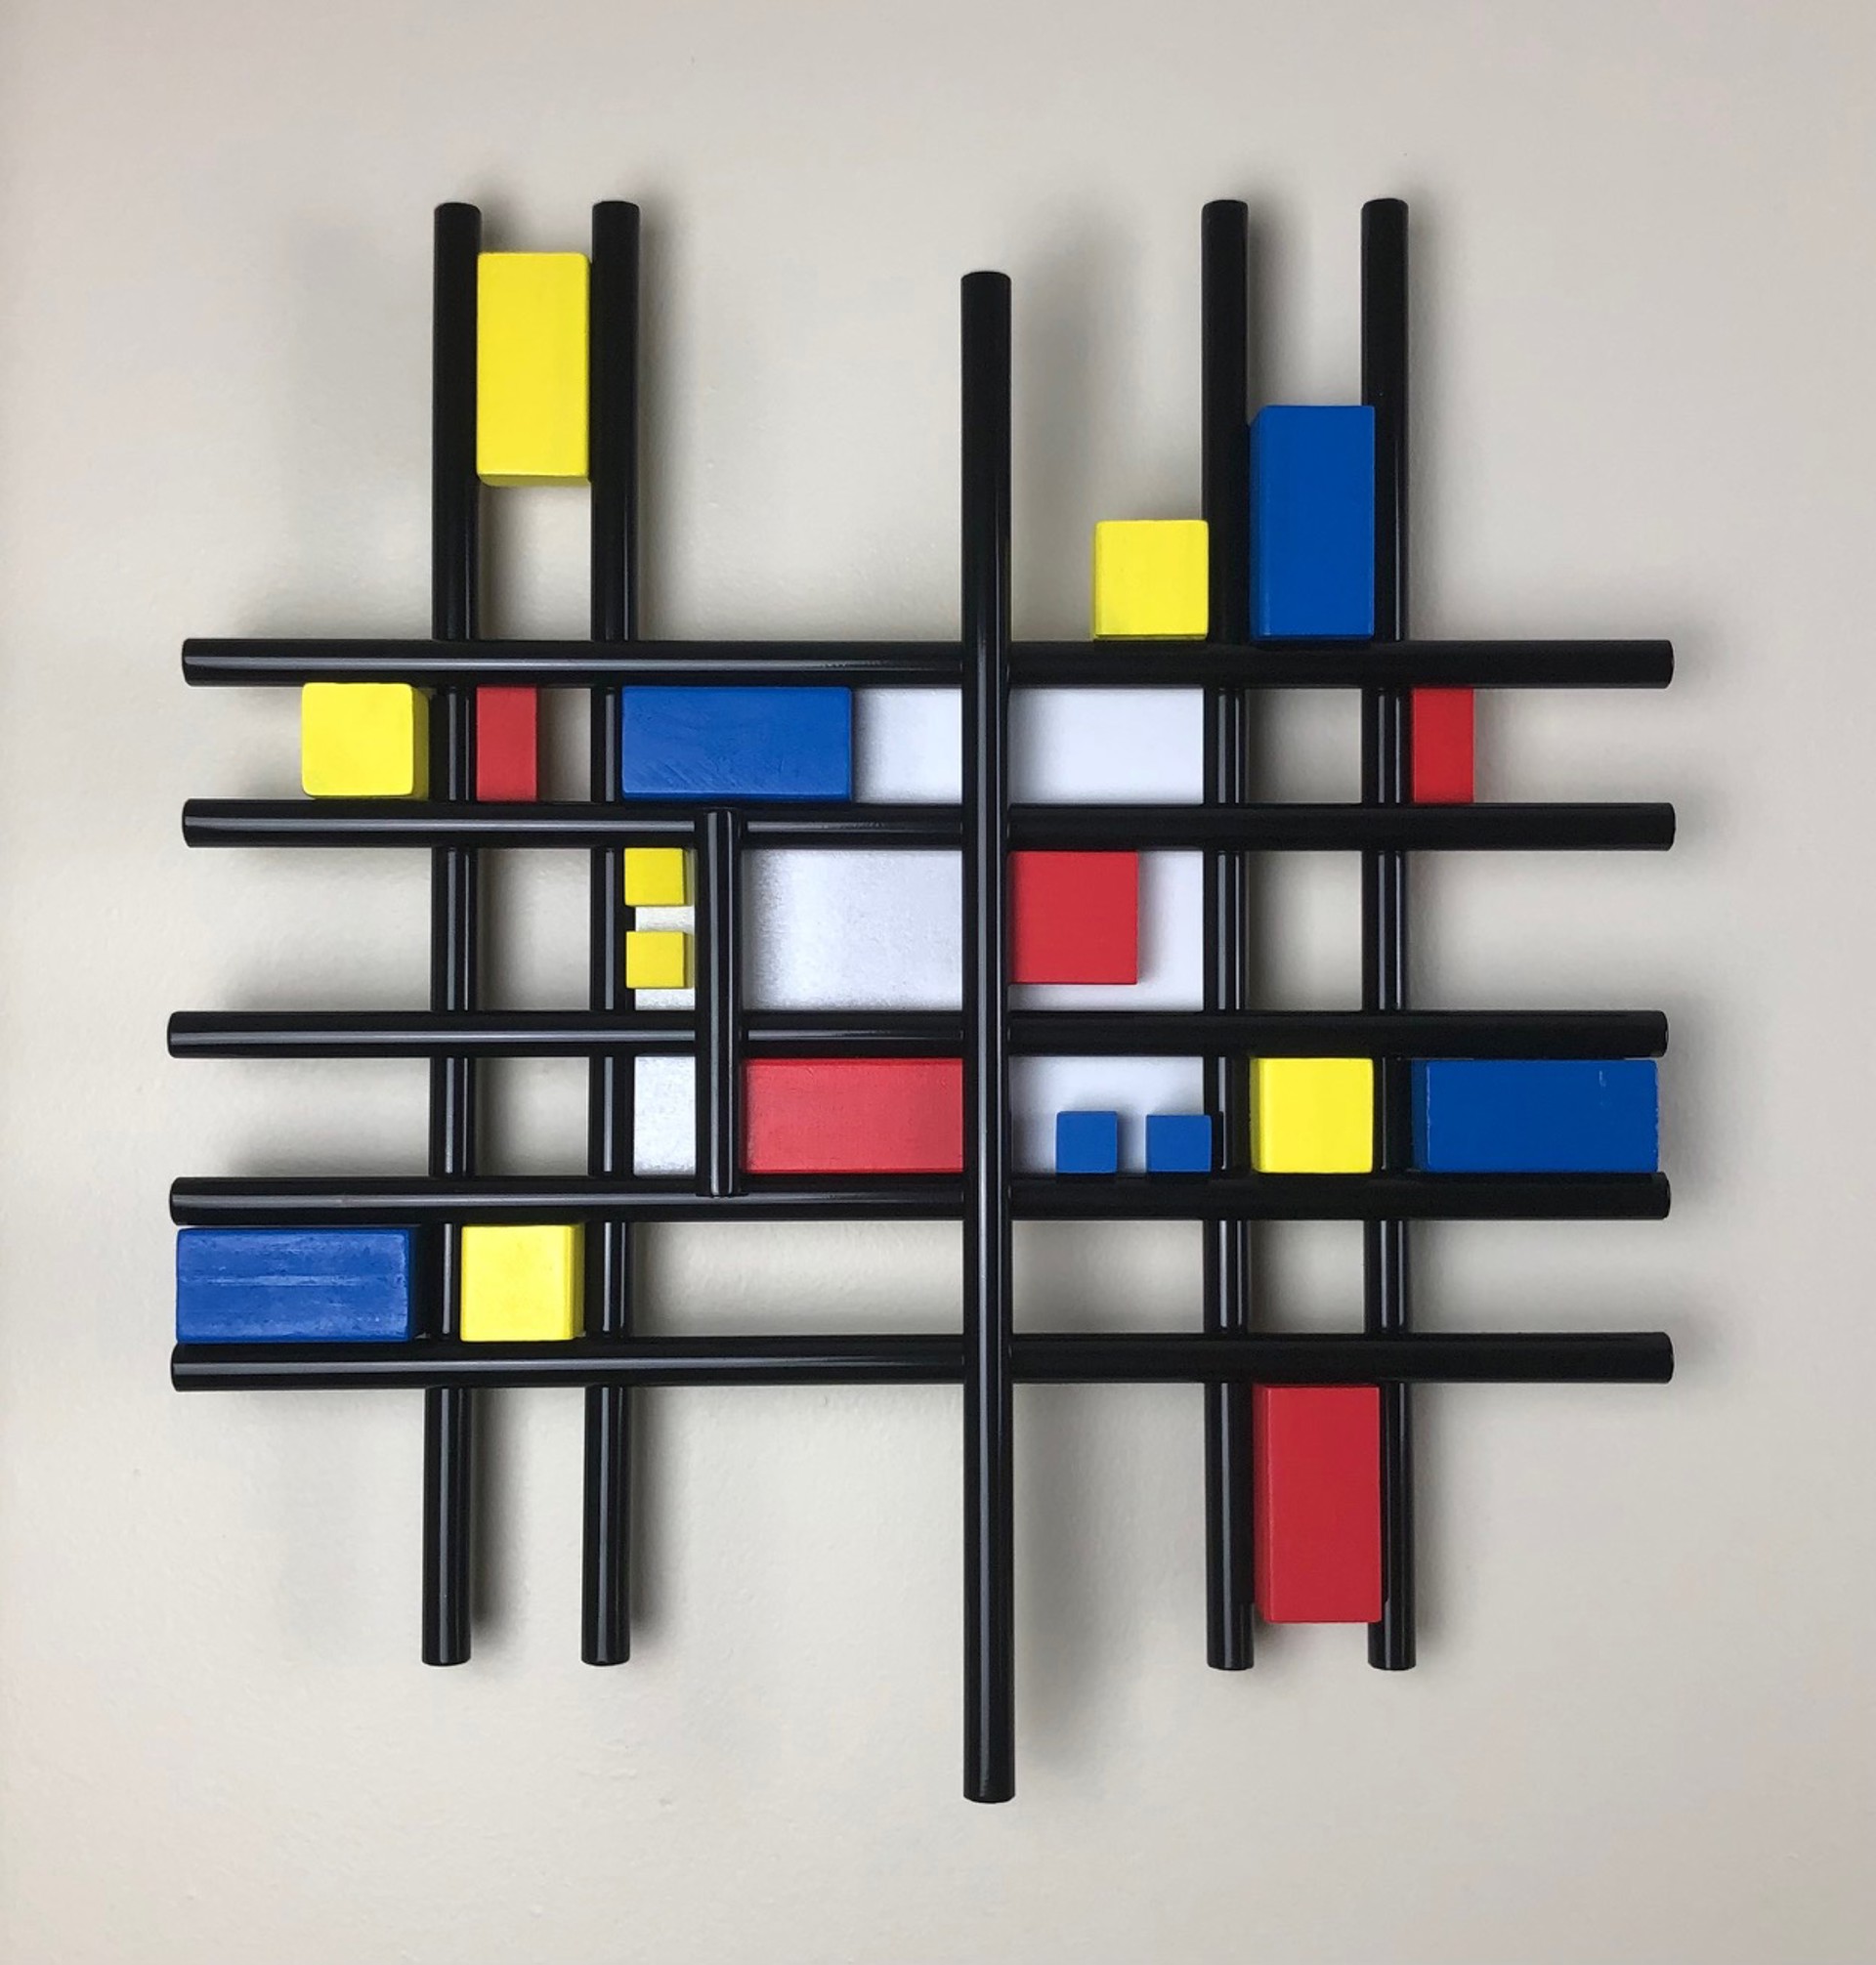 Small Square Mondrian by Joel Reines